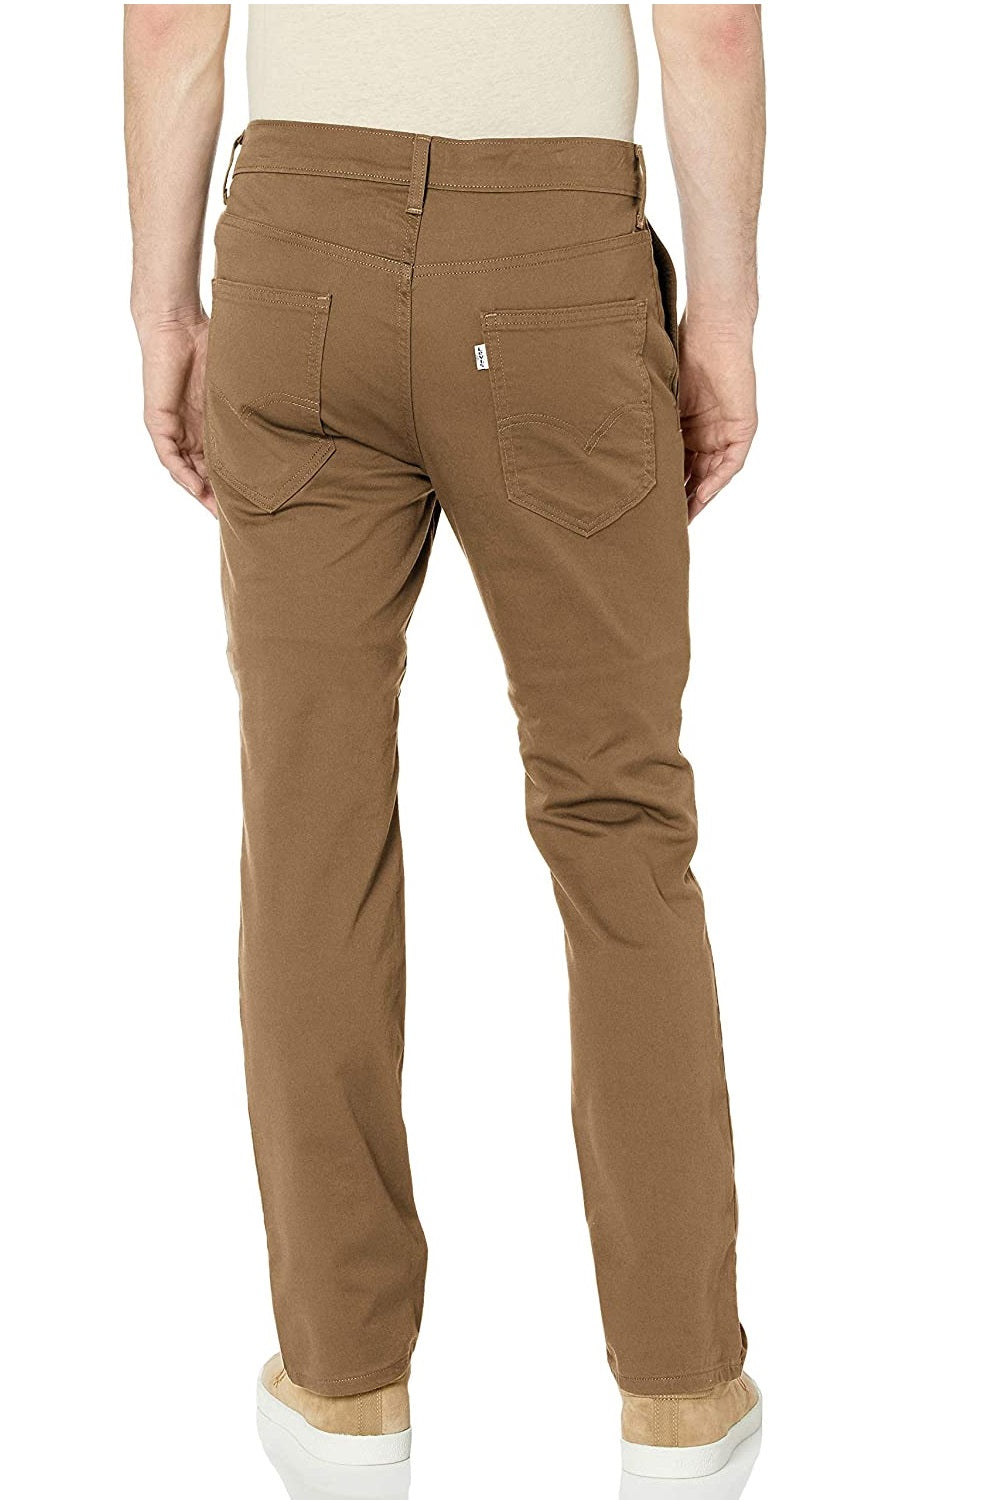 Levi's Men's 511 Slim Fit Hybrid Trousers Cougar Tan Size 33x30